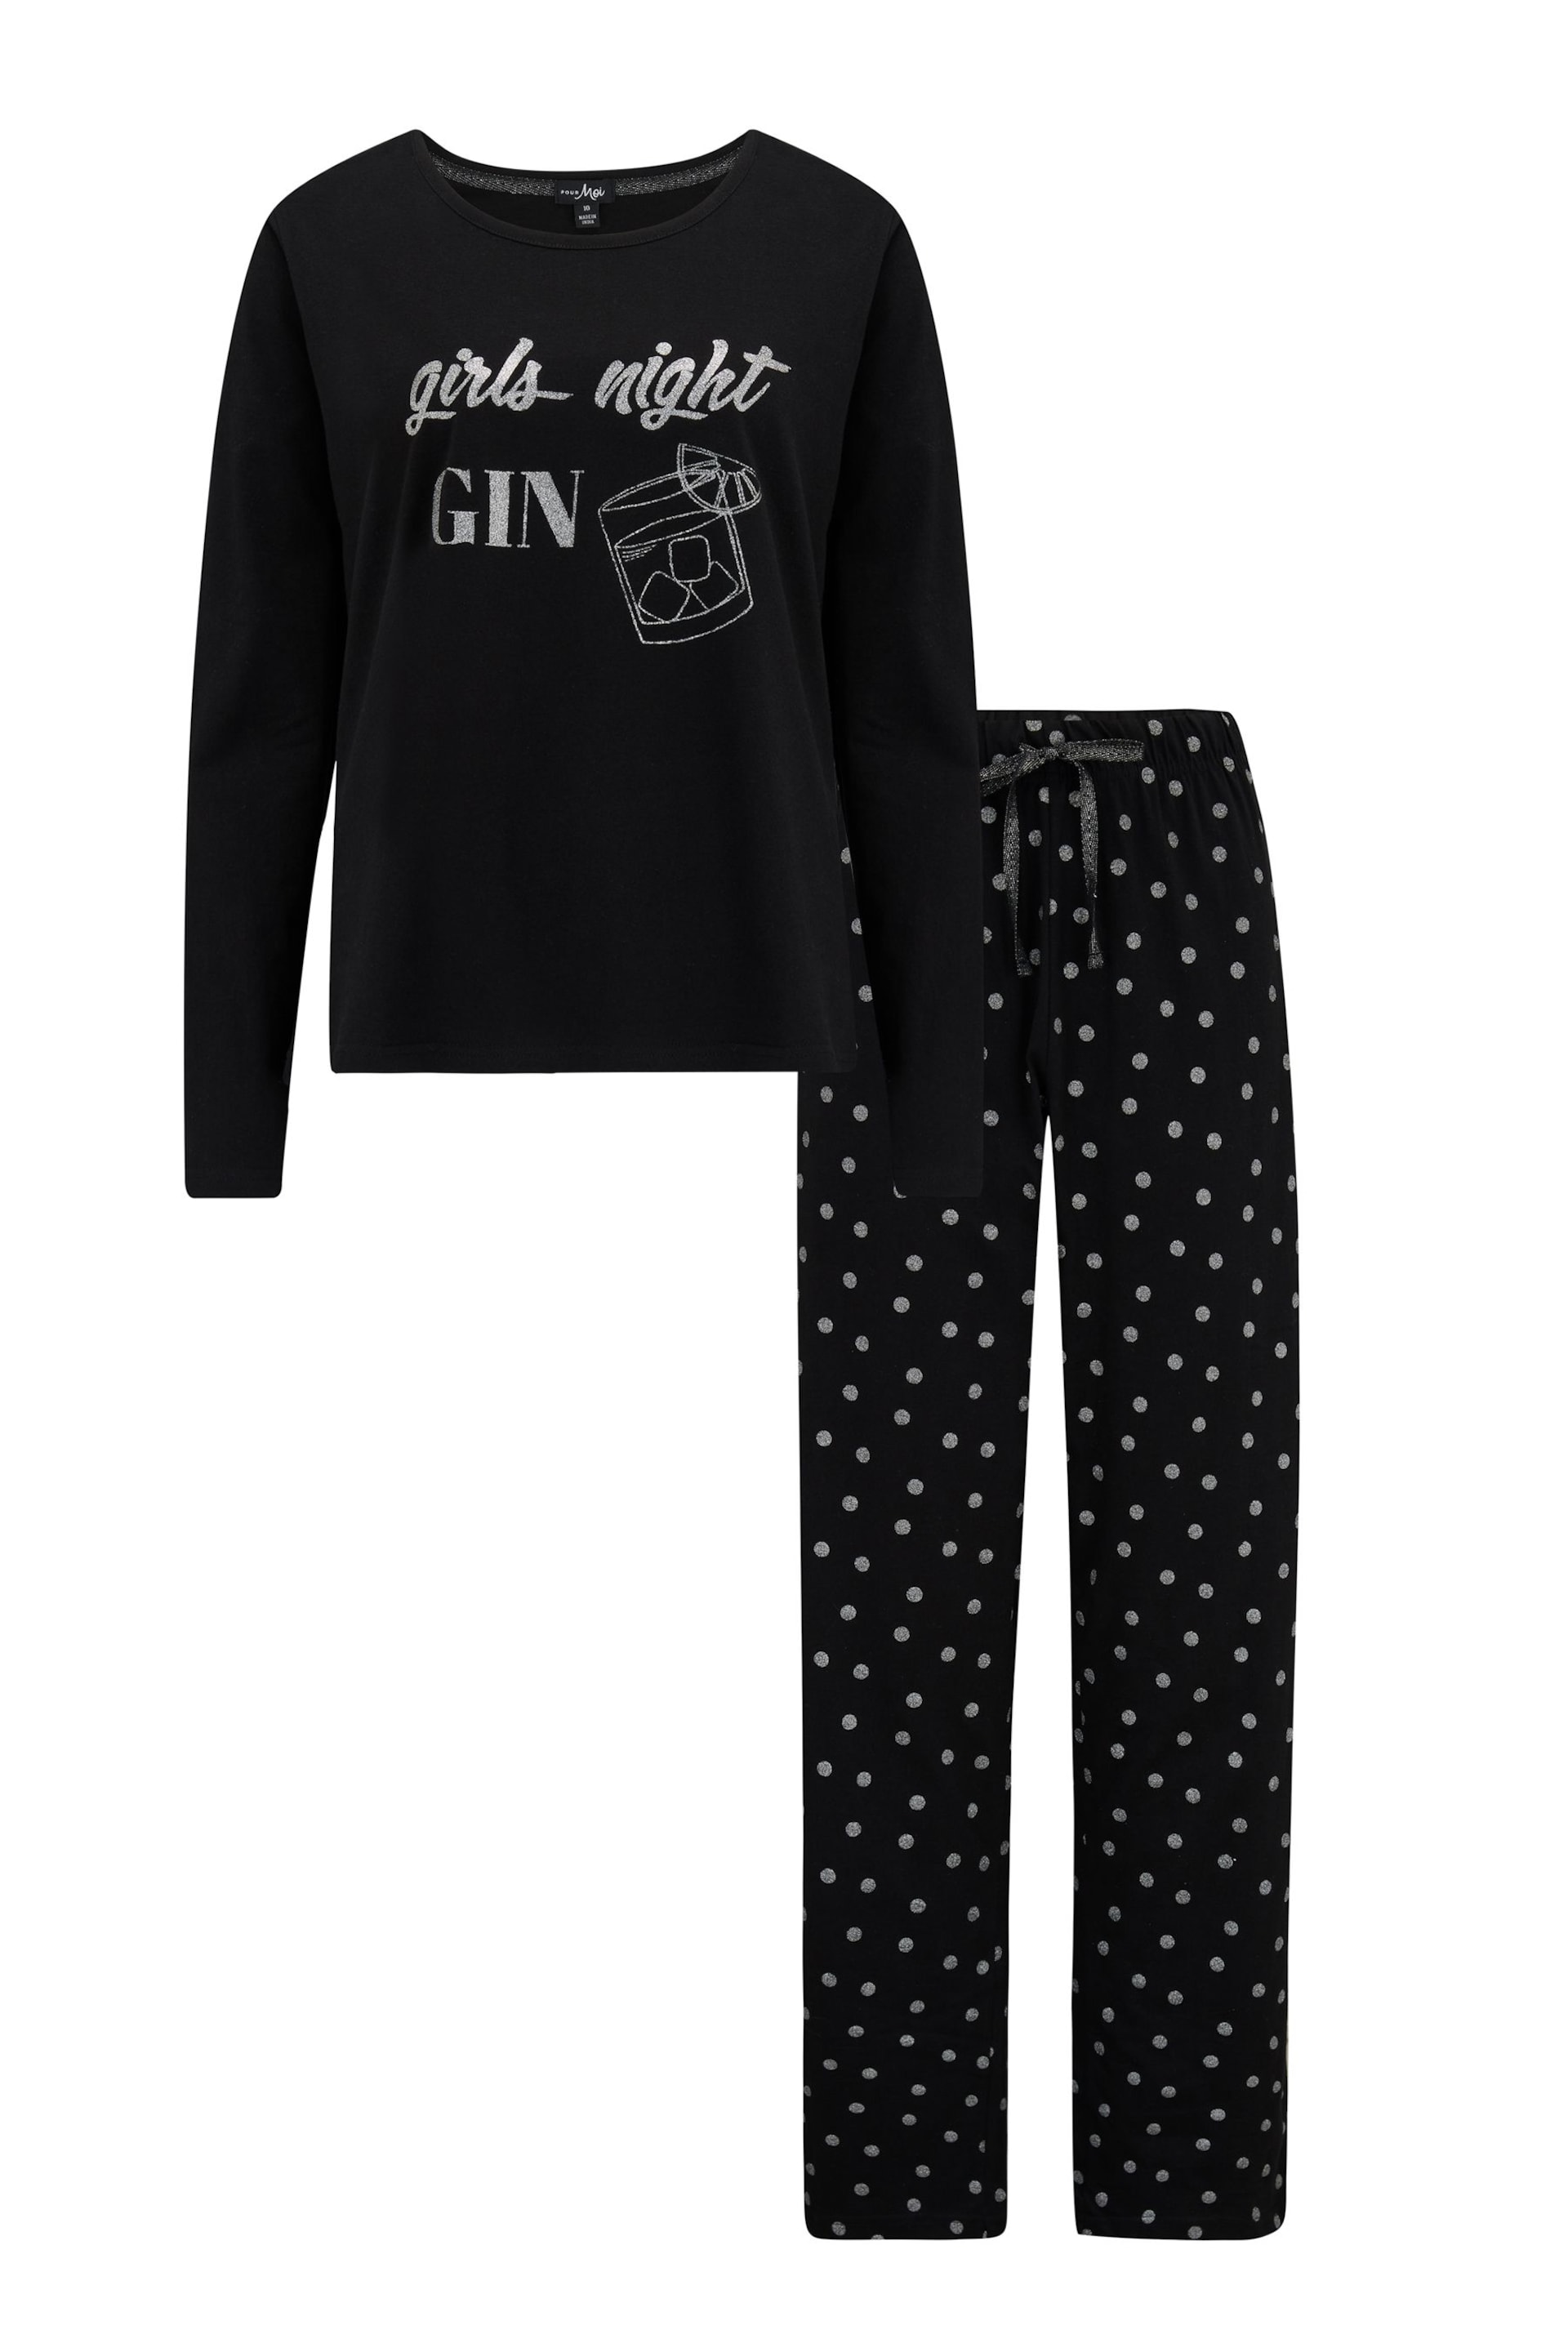 Pour Moi Black Girls Night Gin Cotton Jersey Pyjamas Set - Image 7 of 8